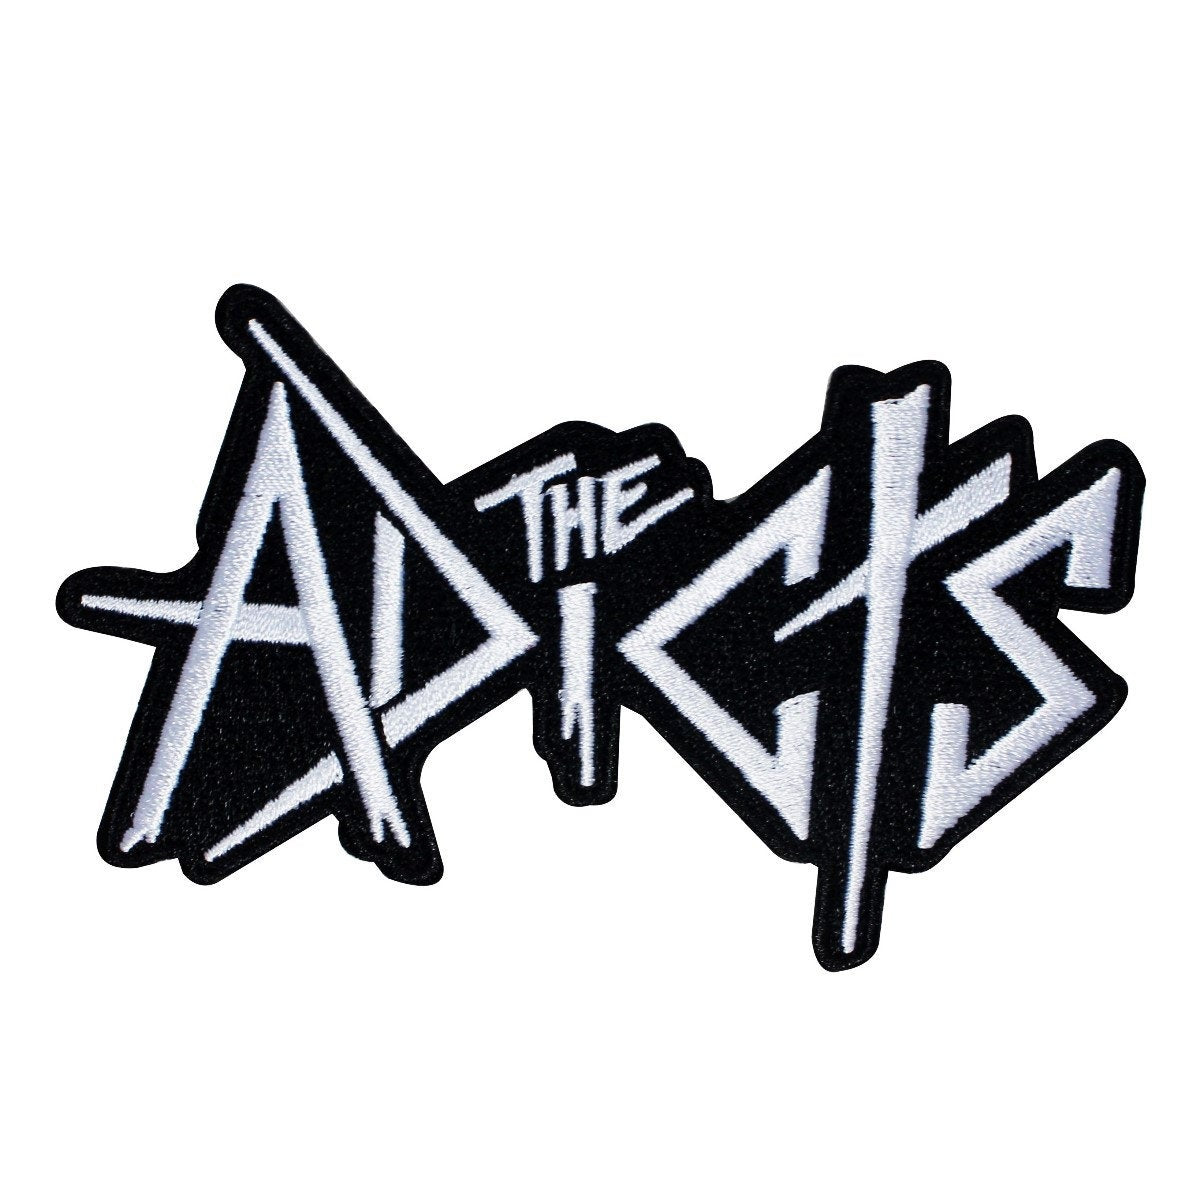 punk rock band logo